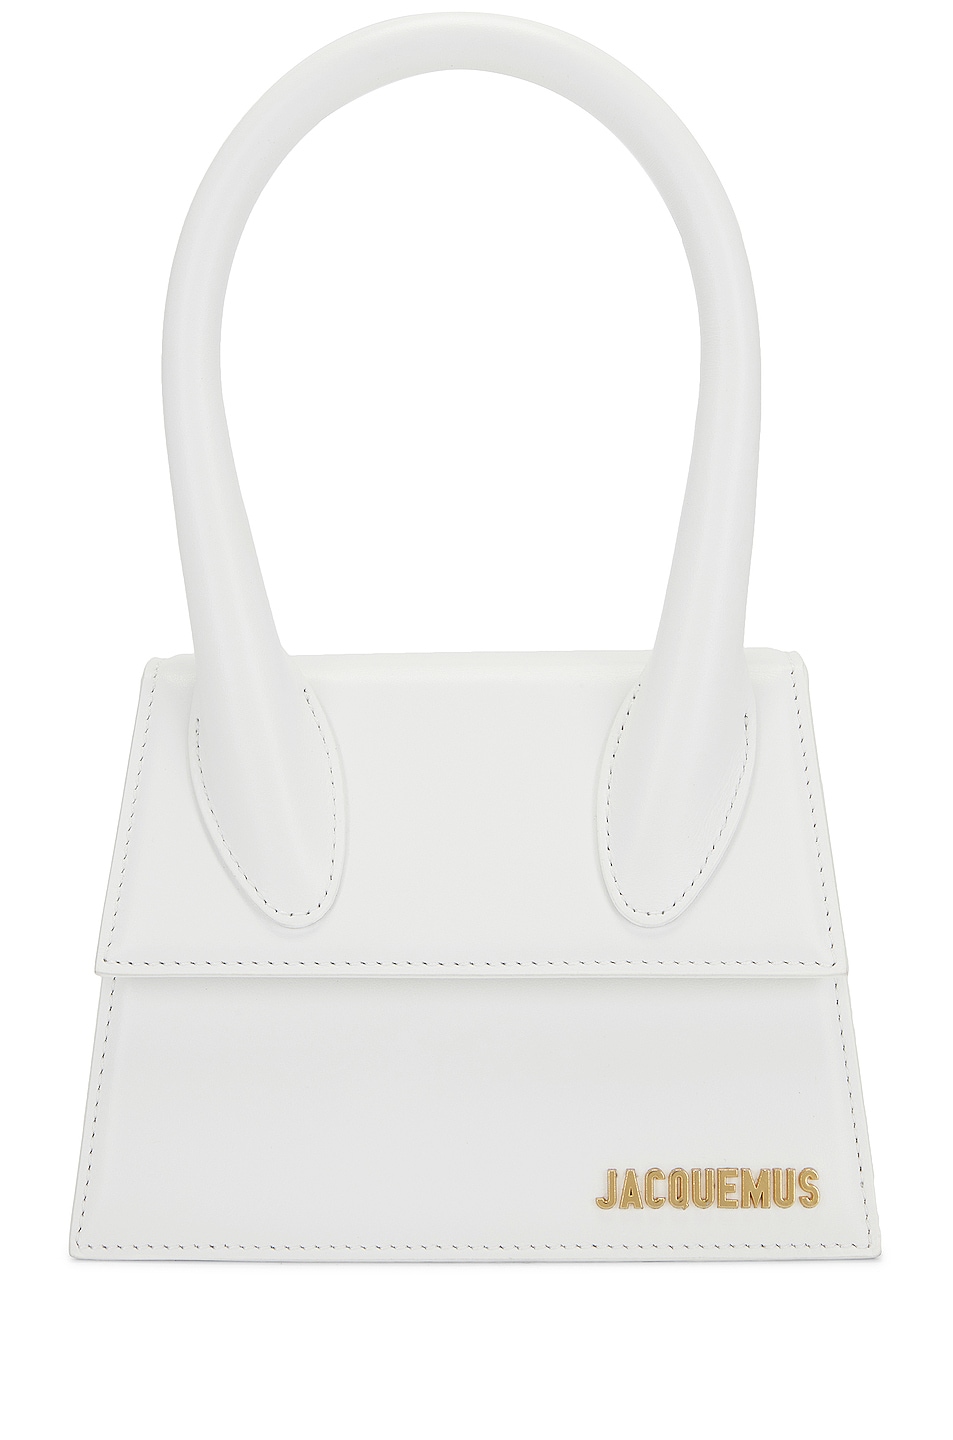 JACQUEMUS Le Chiquito Moyen Bag in White